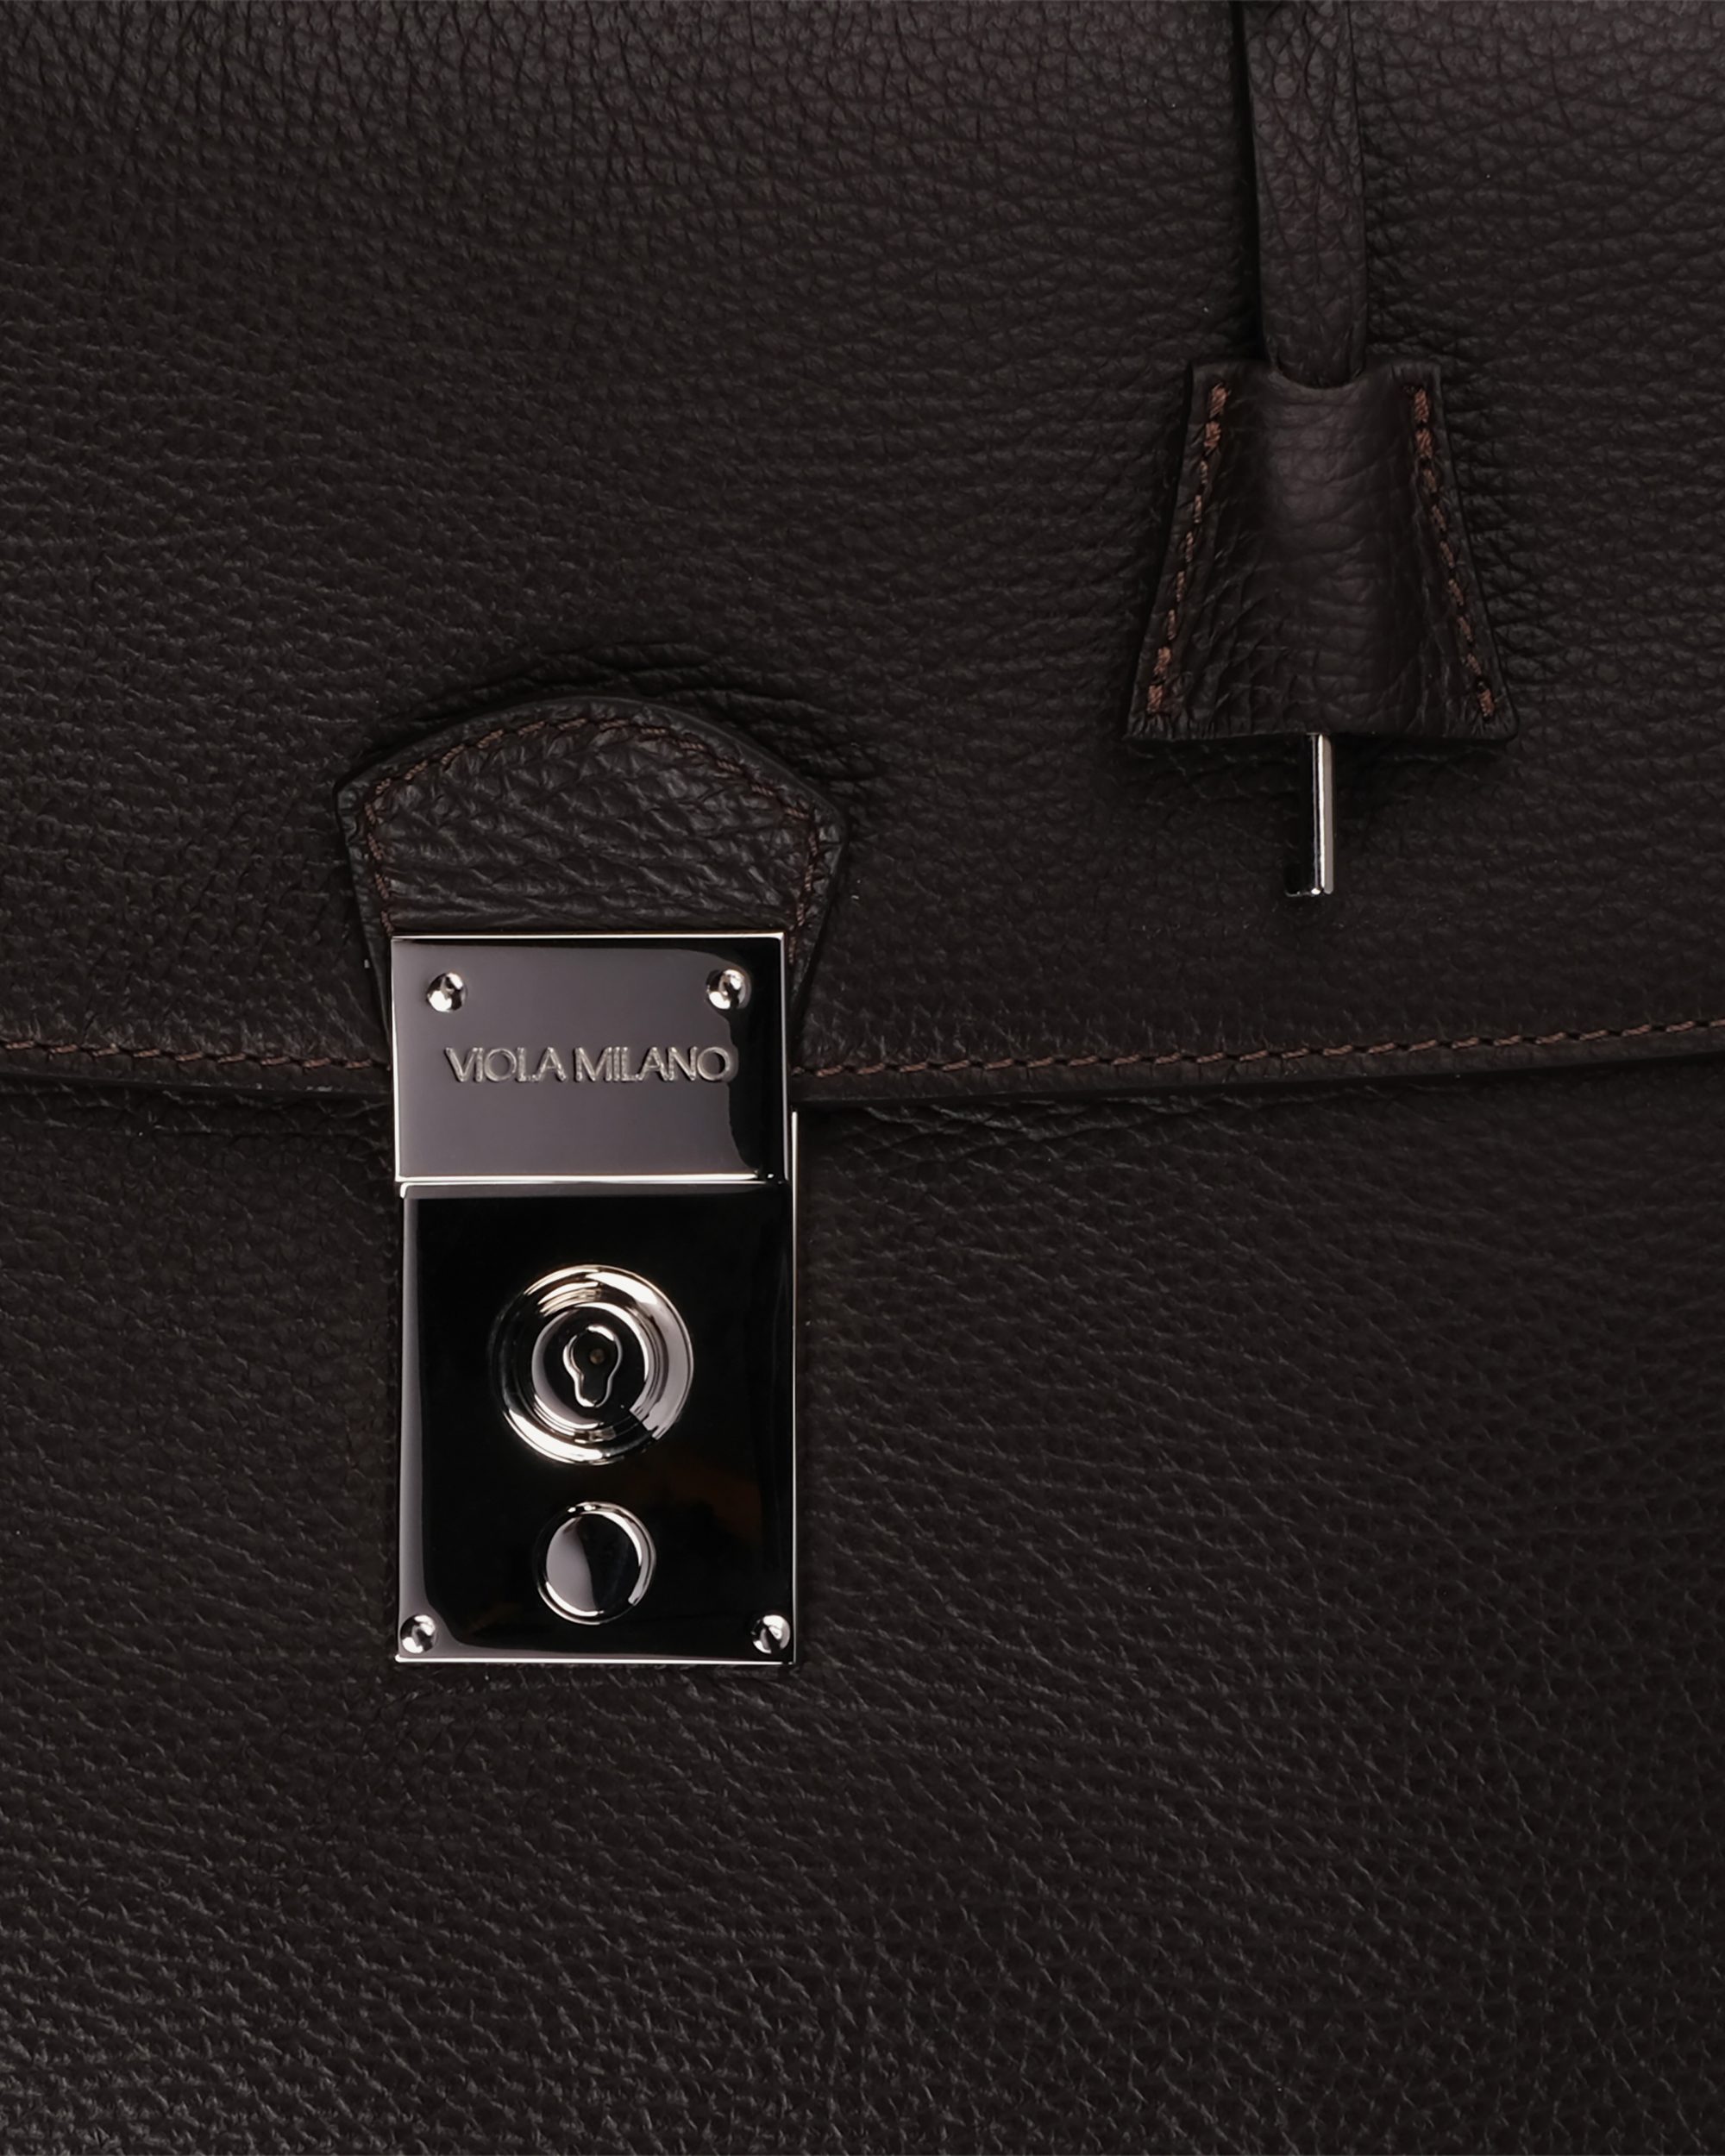 Louis Vuitton Robusto 1 Briefcase Taiga Leather Black 7882261